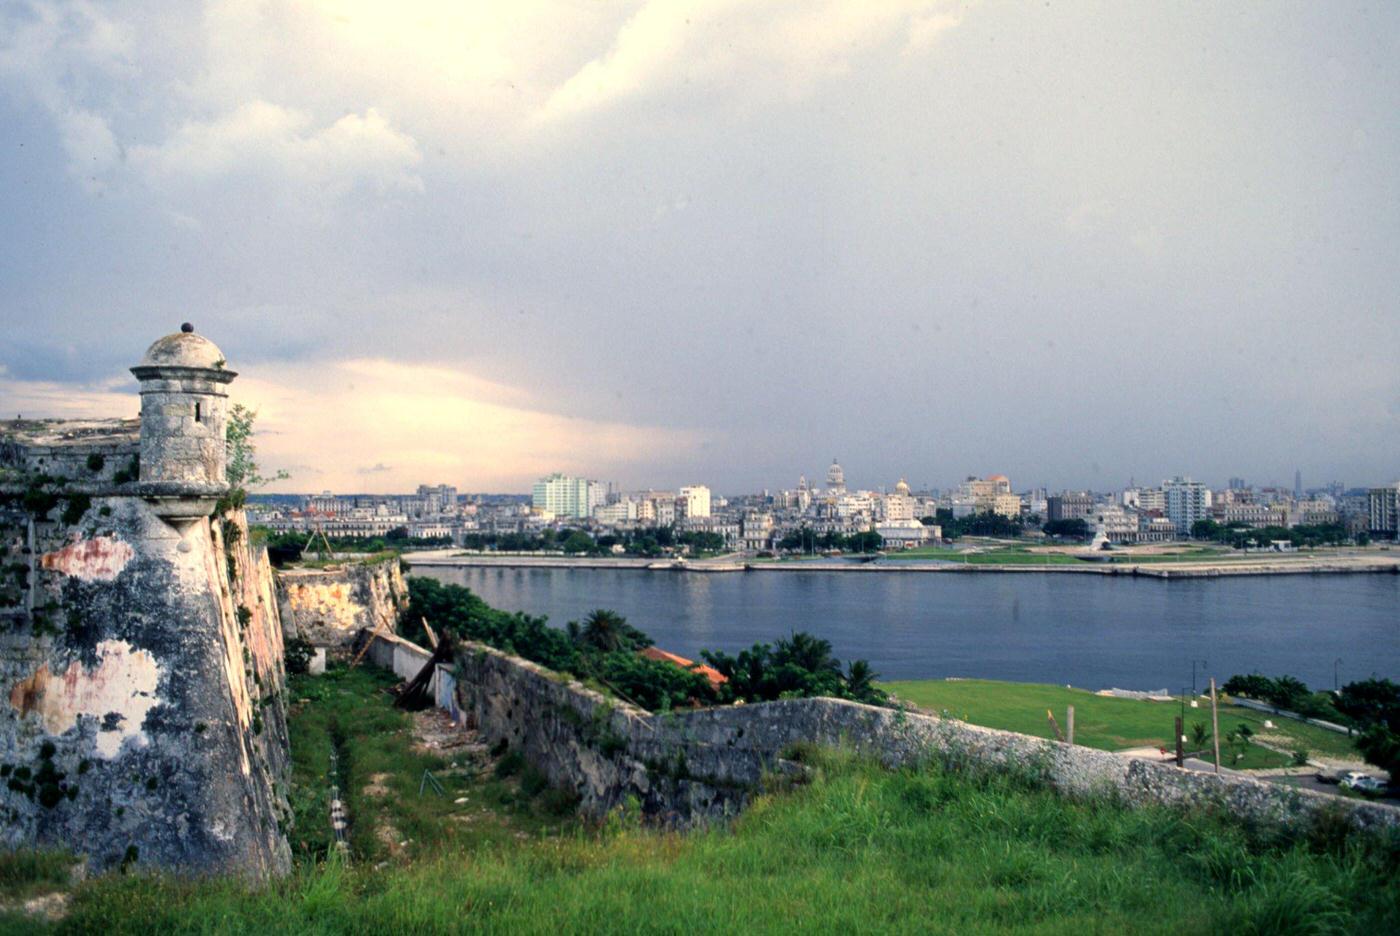 The El Morro fortress overlooking Havana harbor, Cuba, 1991.